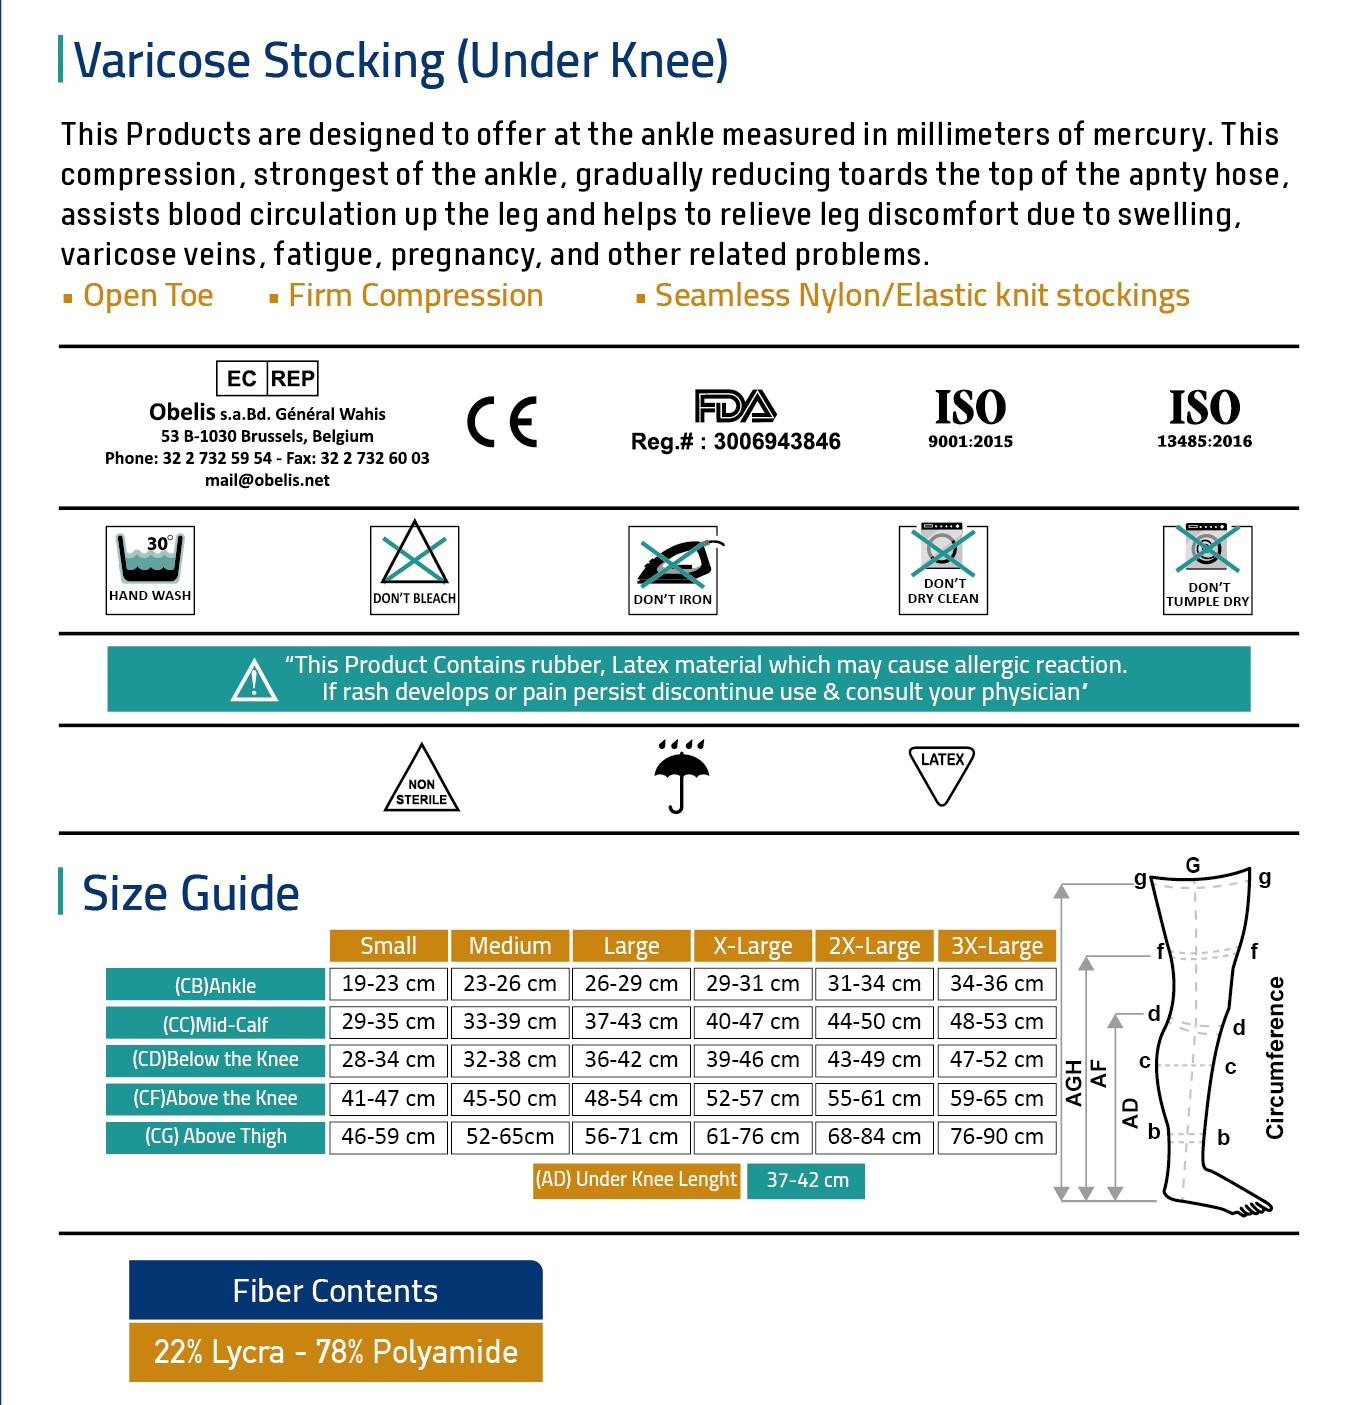 Under knee varicose stocking